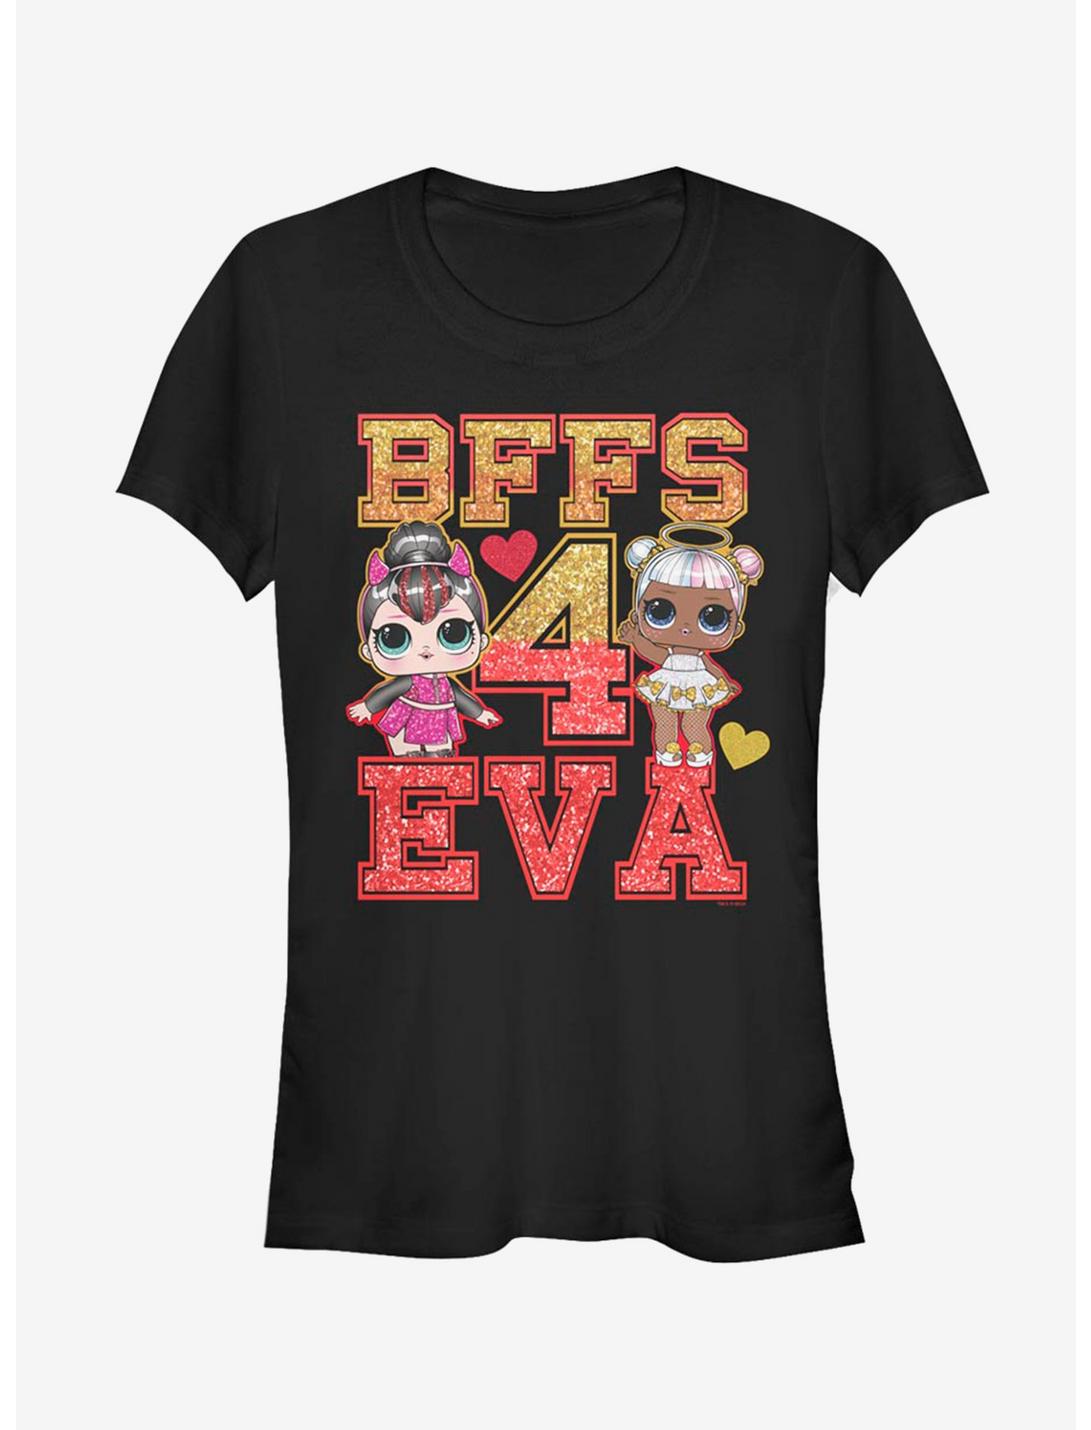 L.O.L. Surprise! BFFS 4EVA Girls T-Shirt, BLACK, hi-res